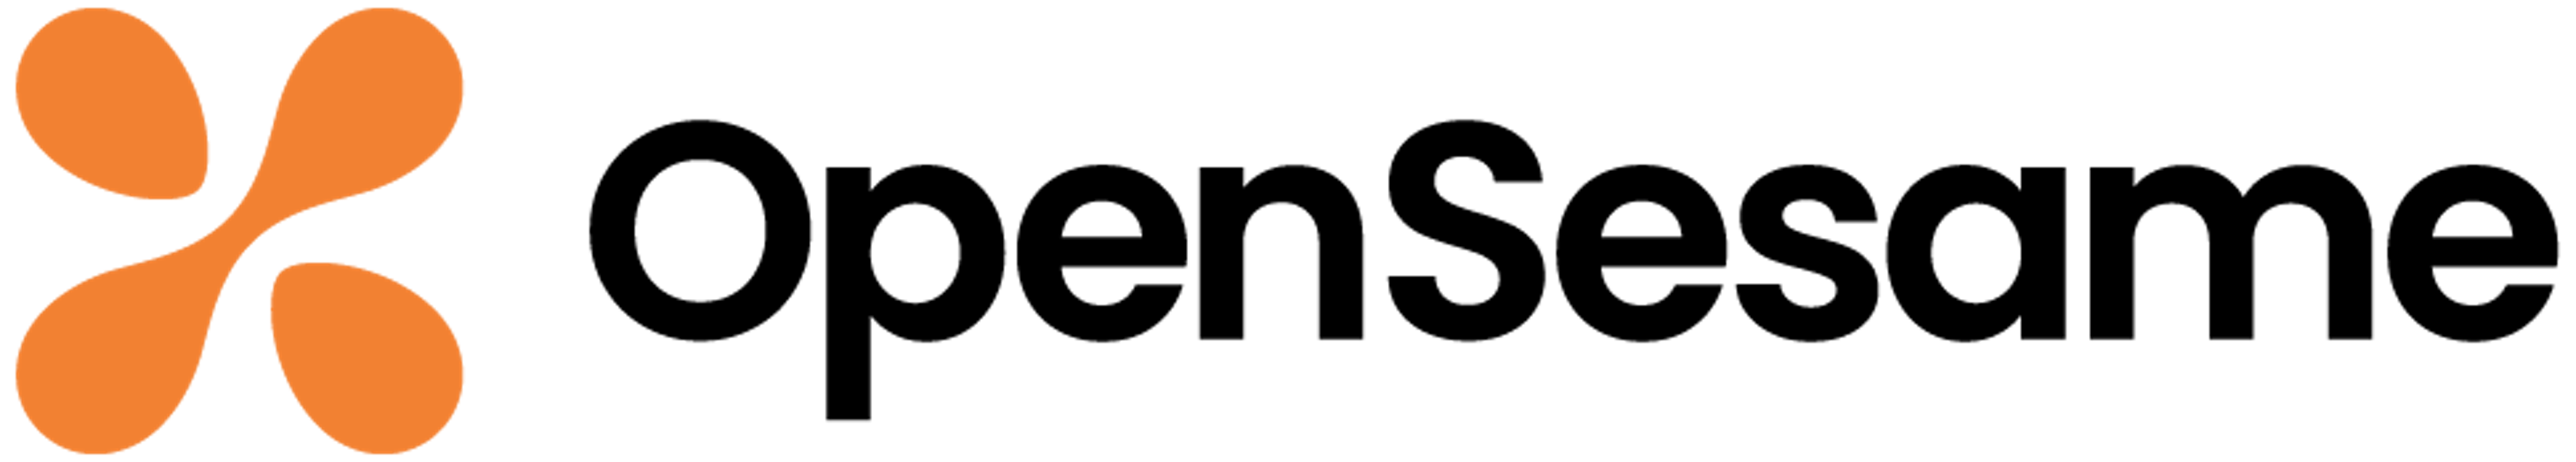 OpenSesame Logo